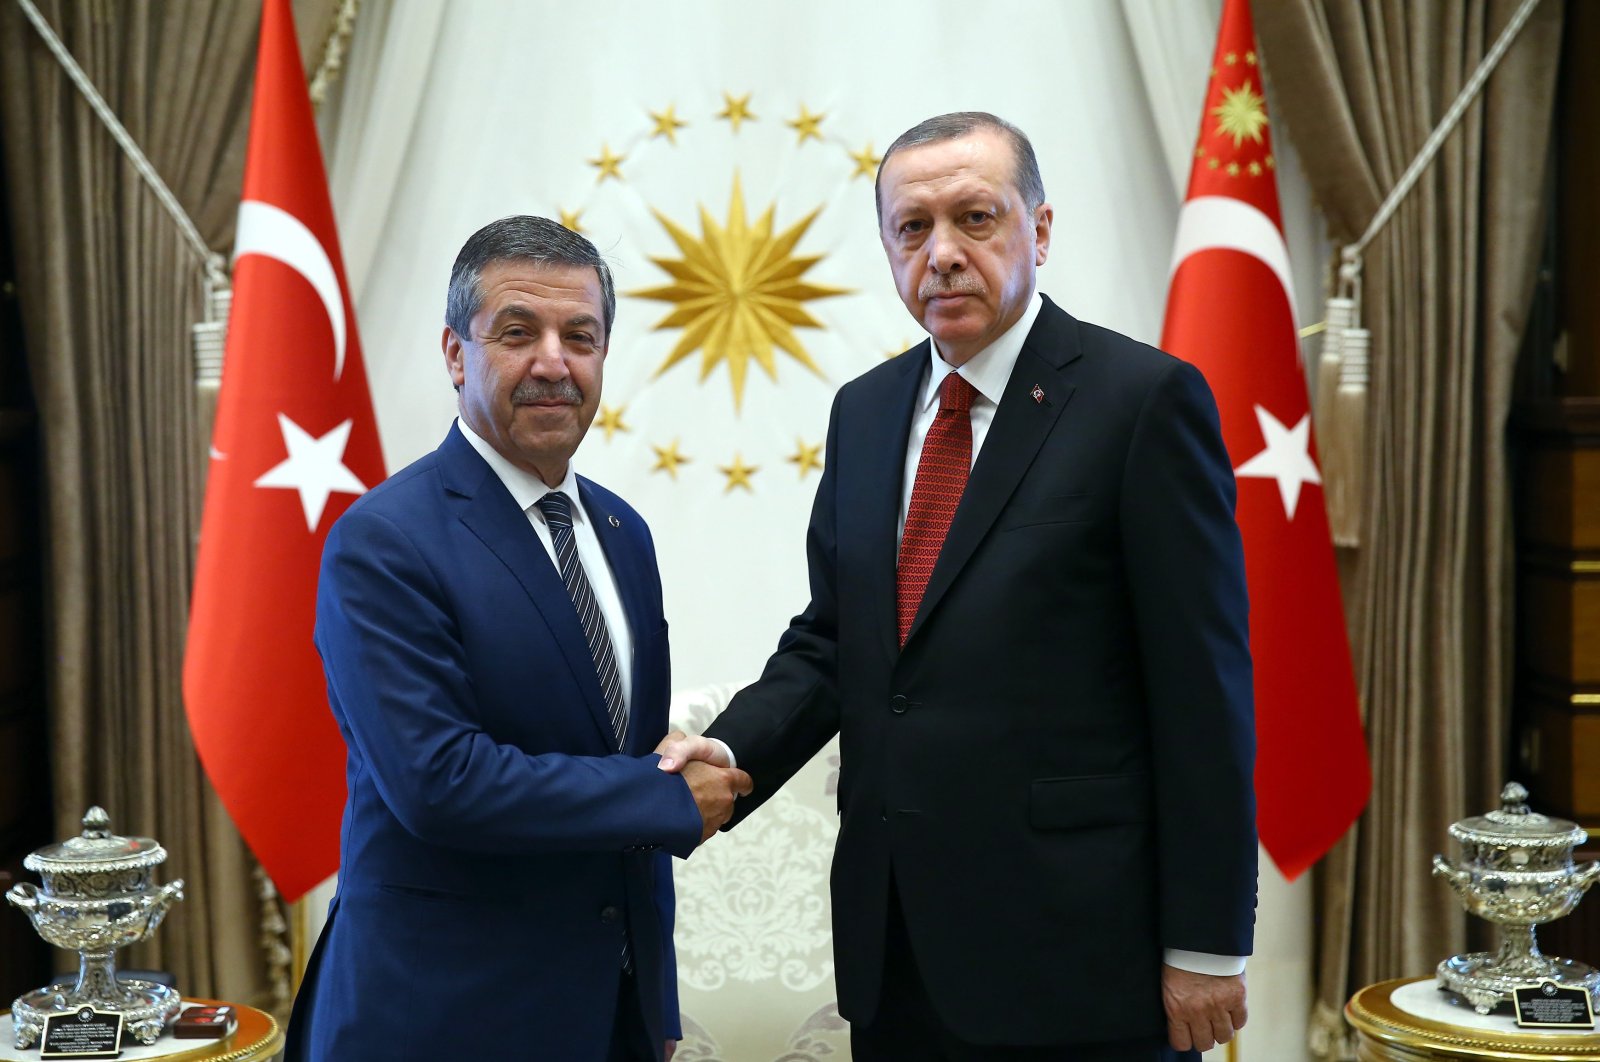 The Turkish Republic of Northern Cyprus' (TRNC) top diplomat Tahsin Ertuğrul (L) is seen during a meeting with President Recep Tayyip Erdoğan in the capital Ankara, Turkey, June 20, 2017. (AA Photo)